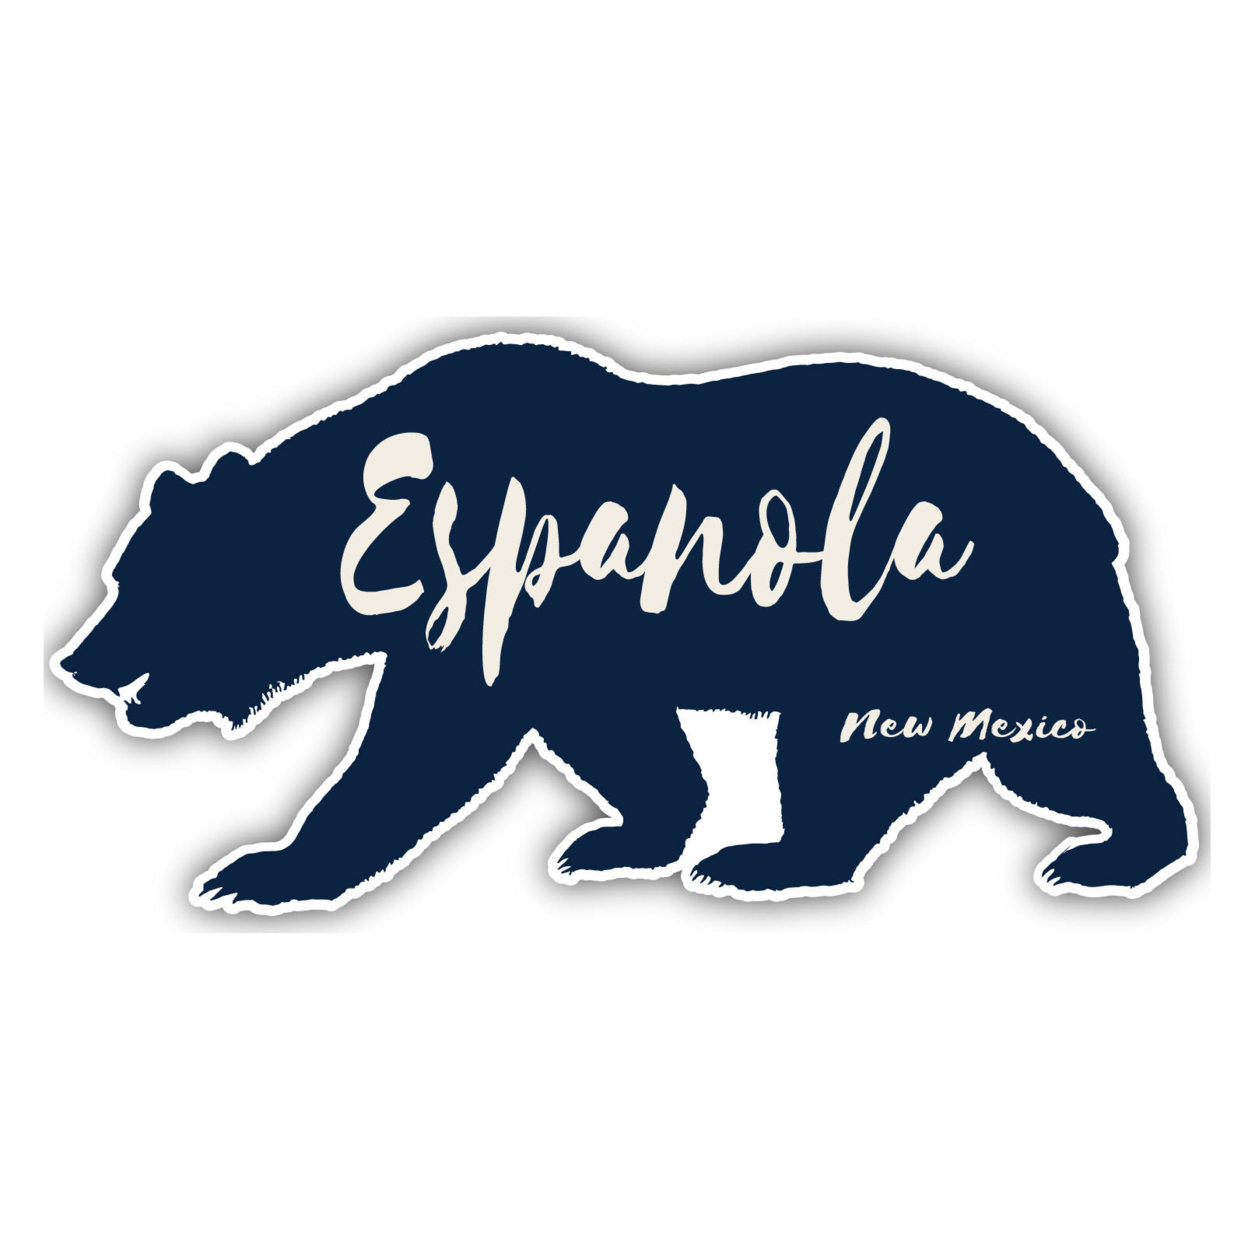 Espanola New Mexico Souvenir Decorative Stickers (Choose Theme And Size) - 4-Pack, 12-Inch, Bear